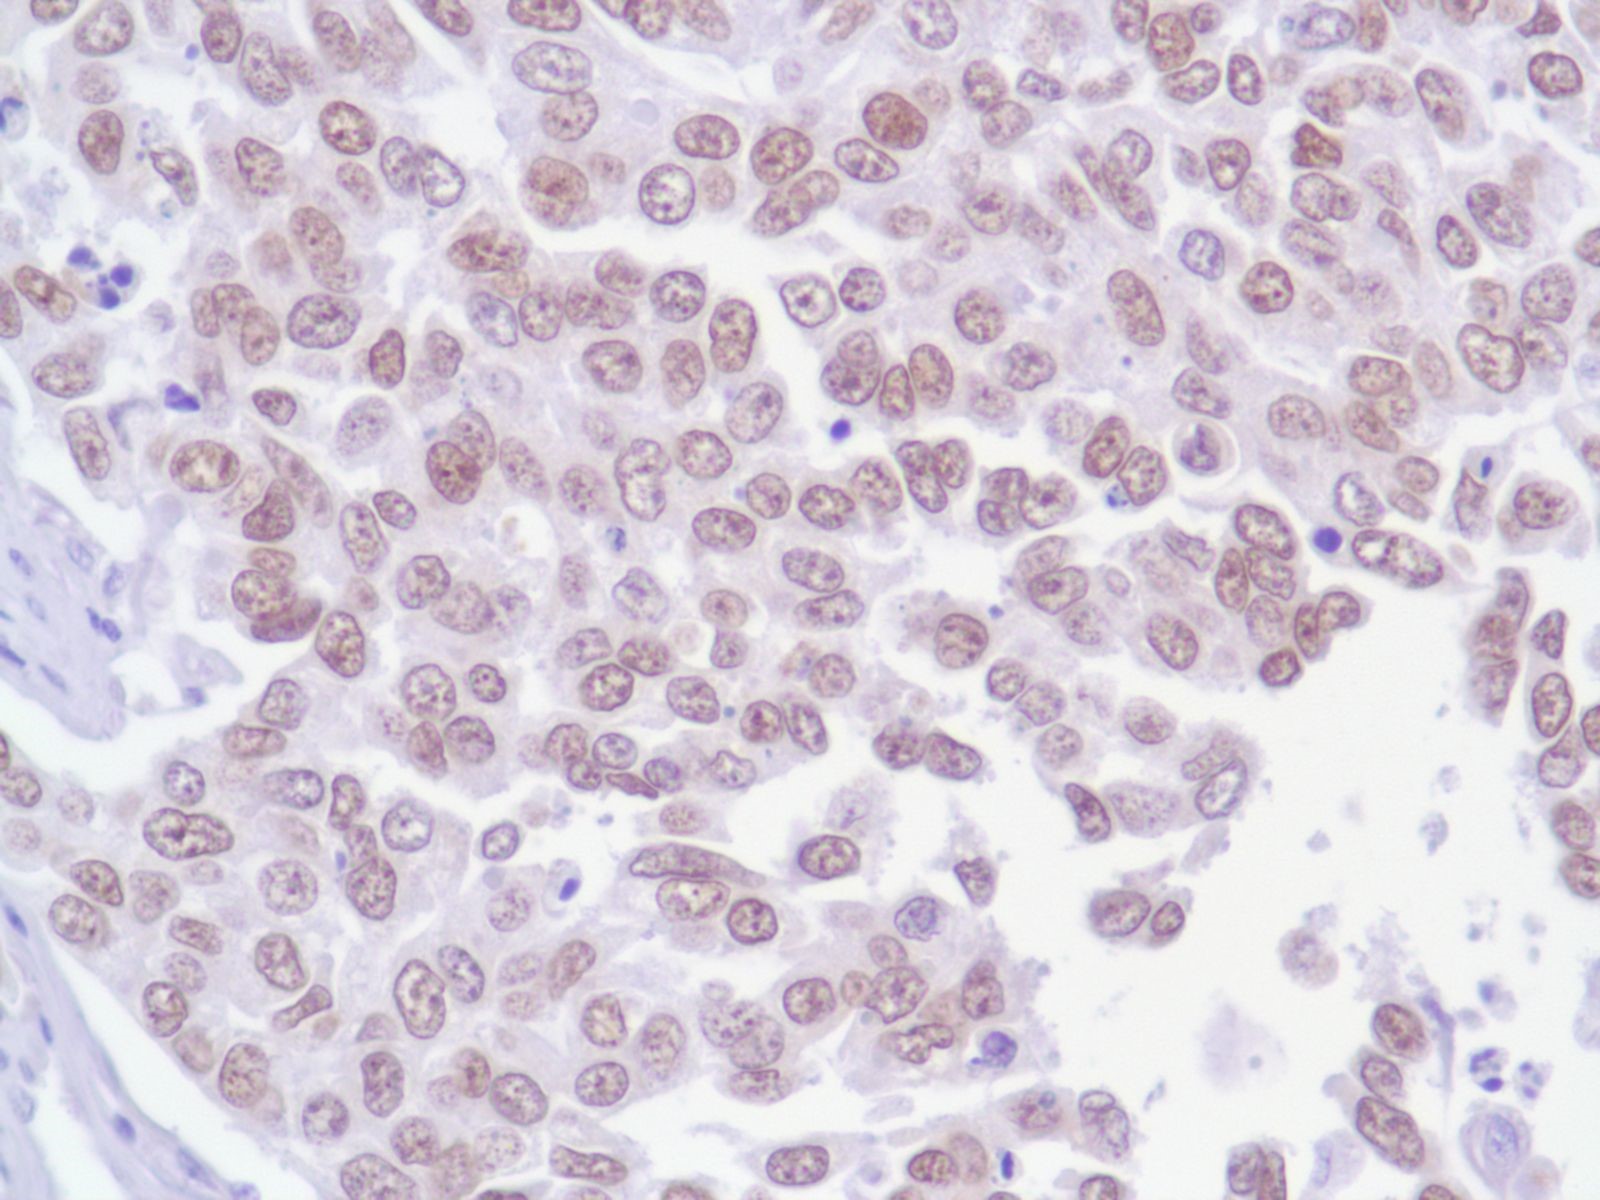 Anti-FOXA1 antibody [SP88] （#ARG53038）の免疫組織染色像